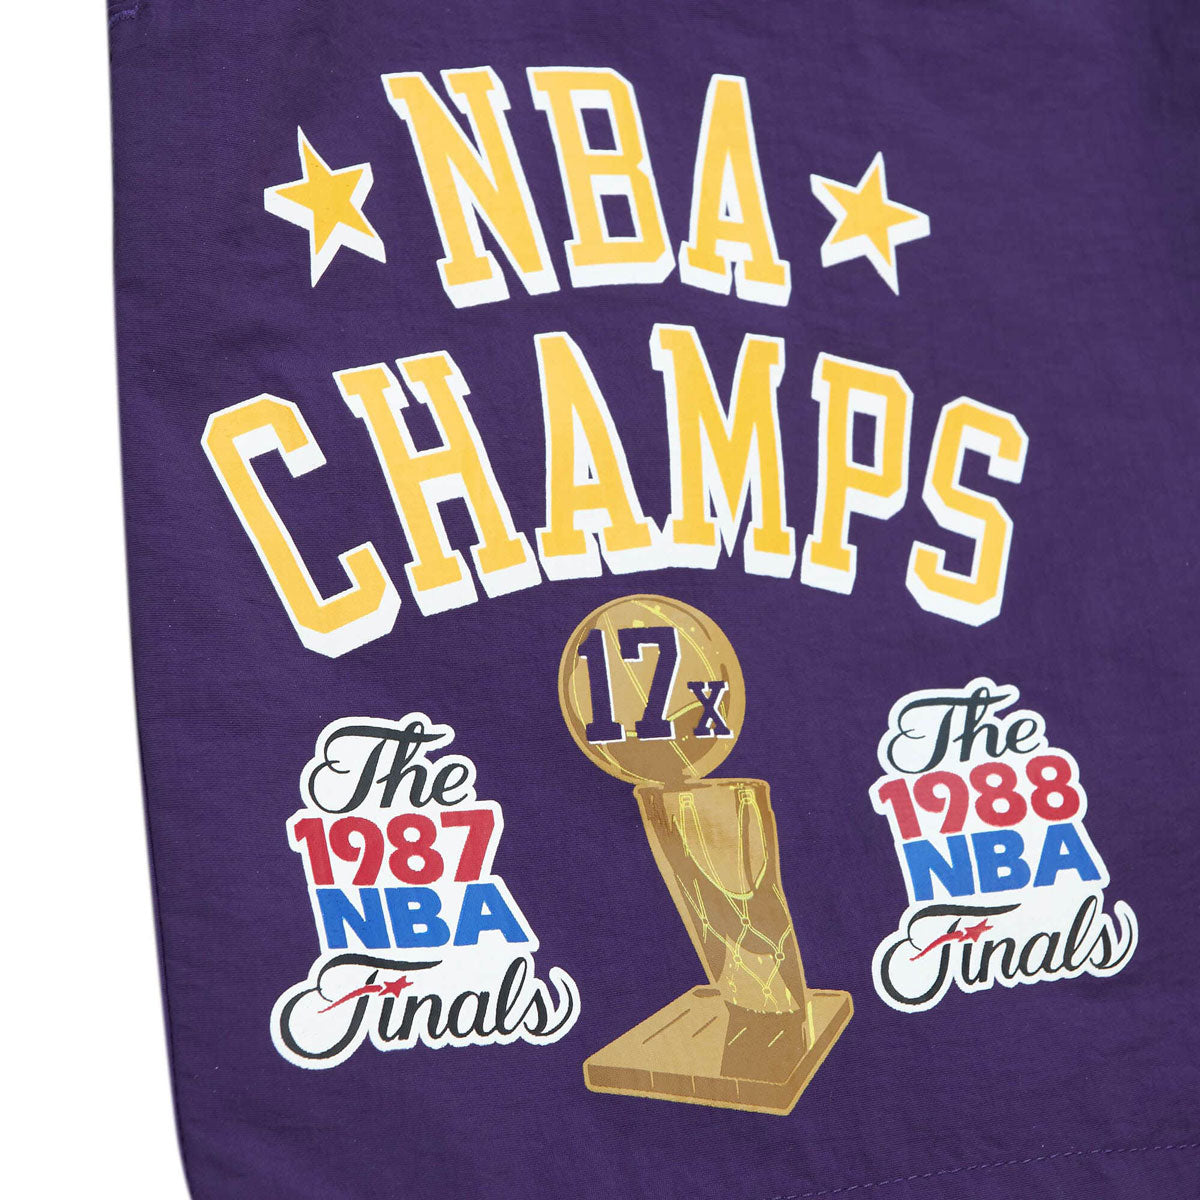 Mitchell & Ness x NBA Lakers Patch Grey T-Shirt